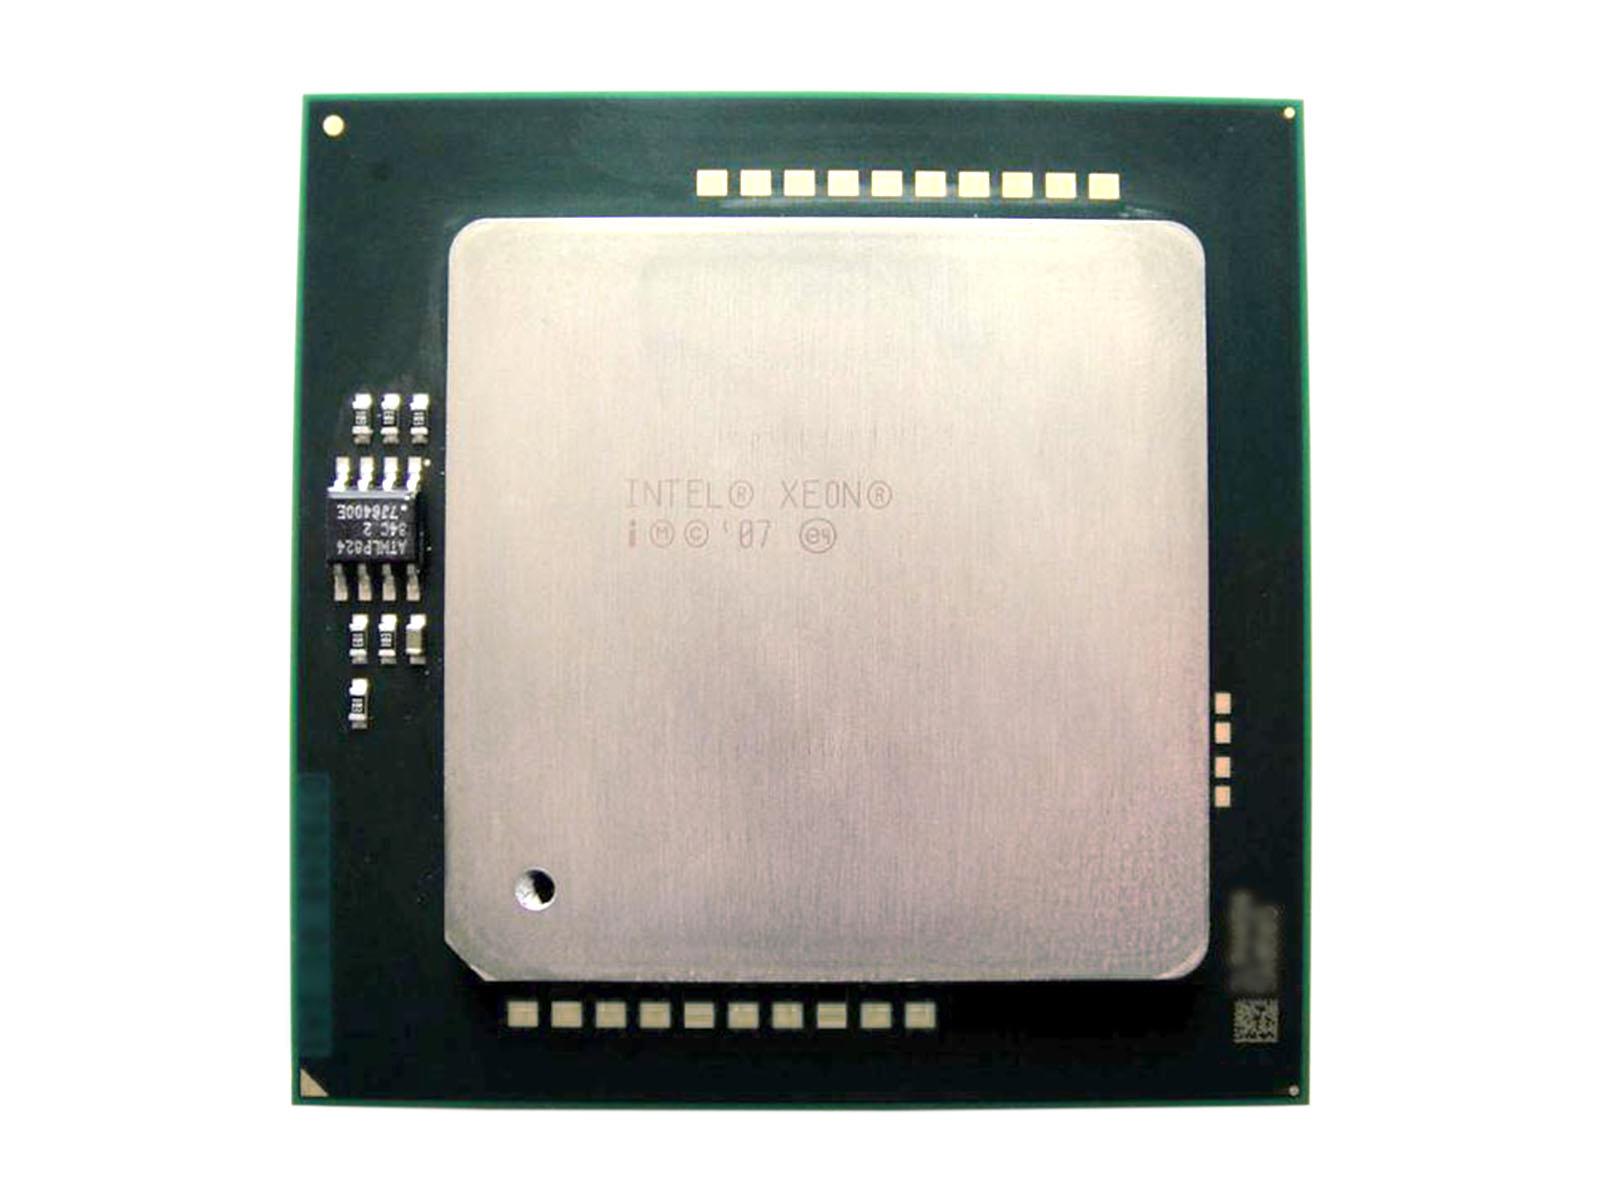 Intel Xeon 604 3.2GHz CPU